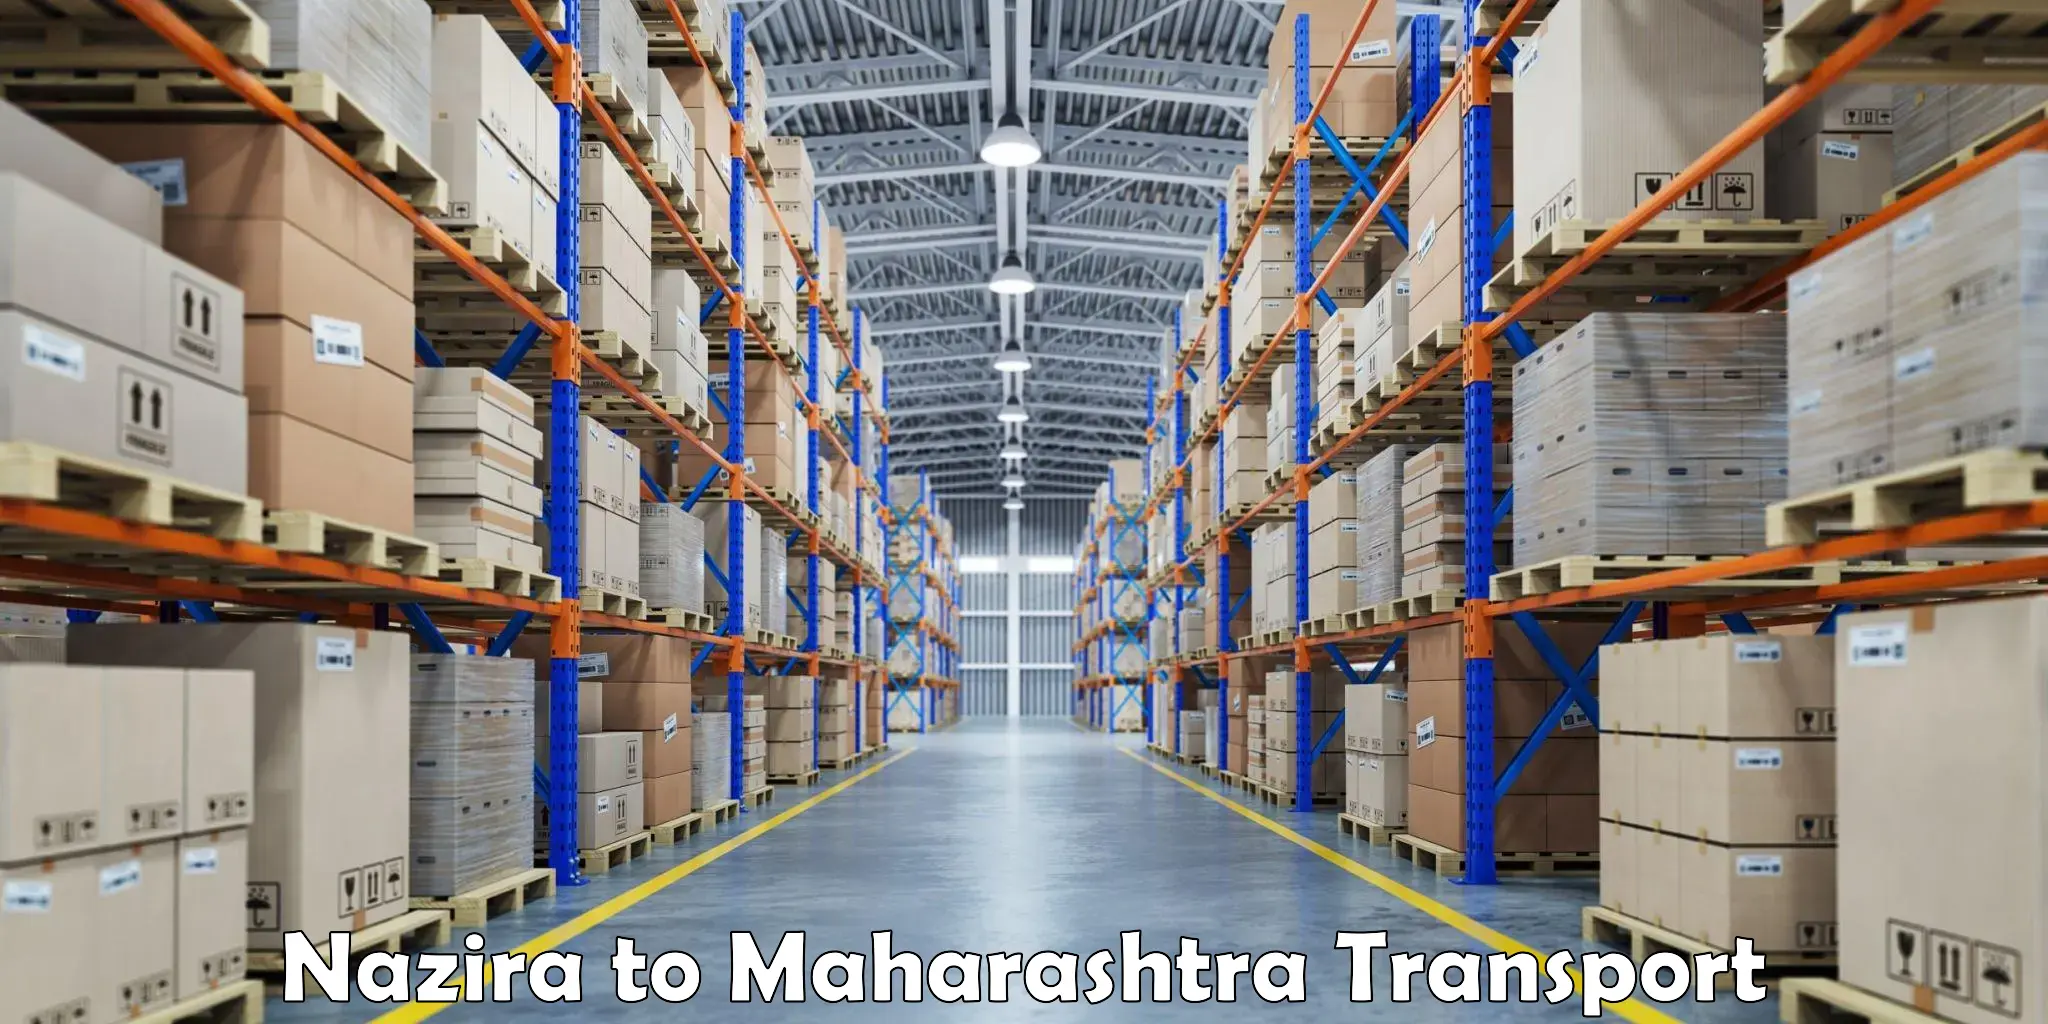 Truck transport companies in India Nazira to Omerga